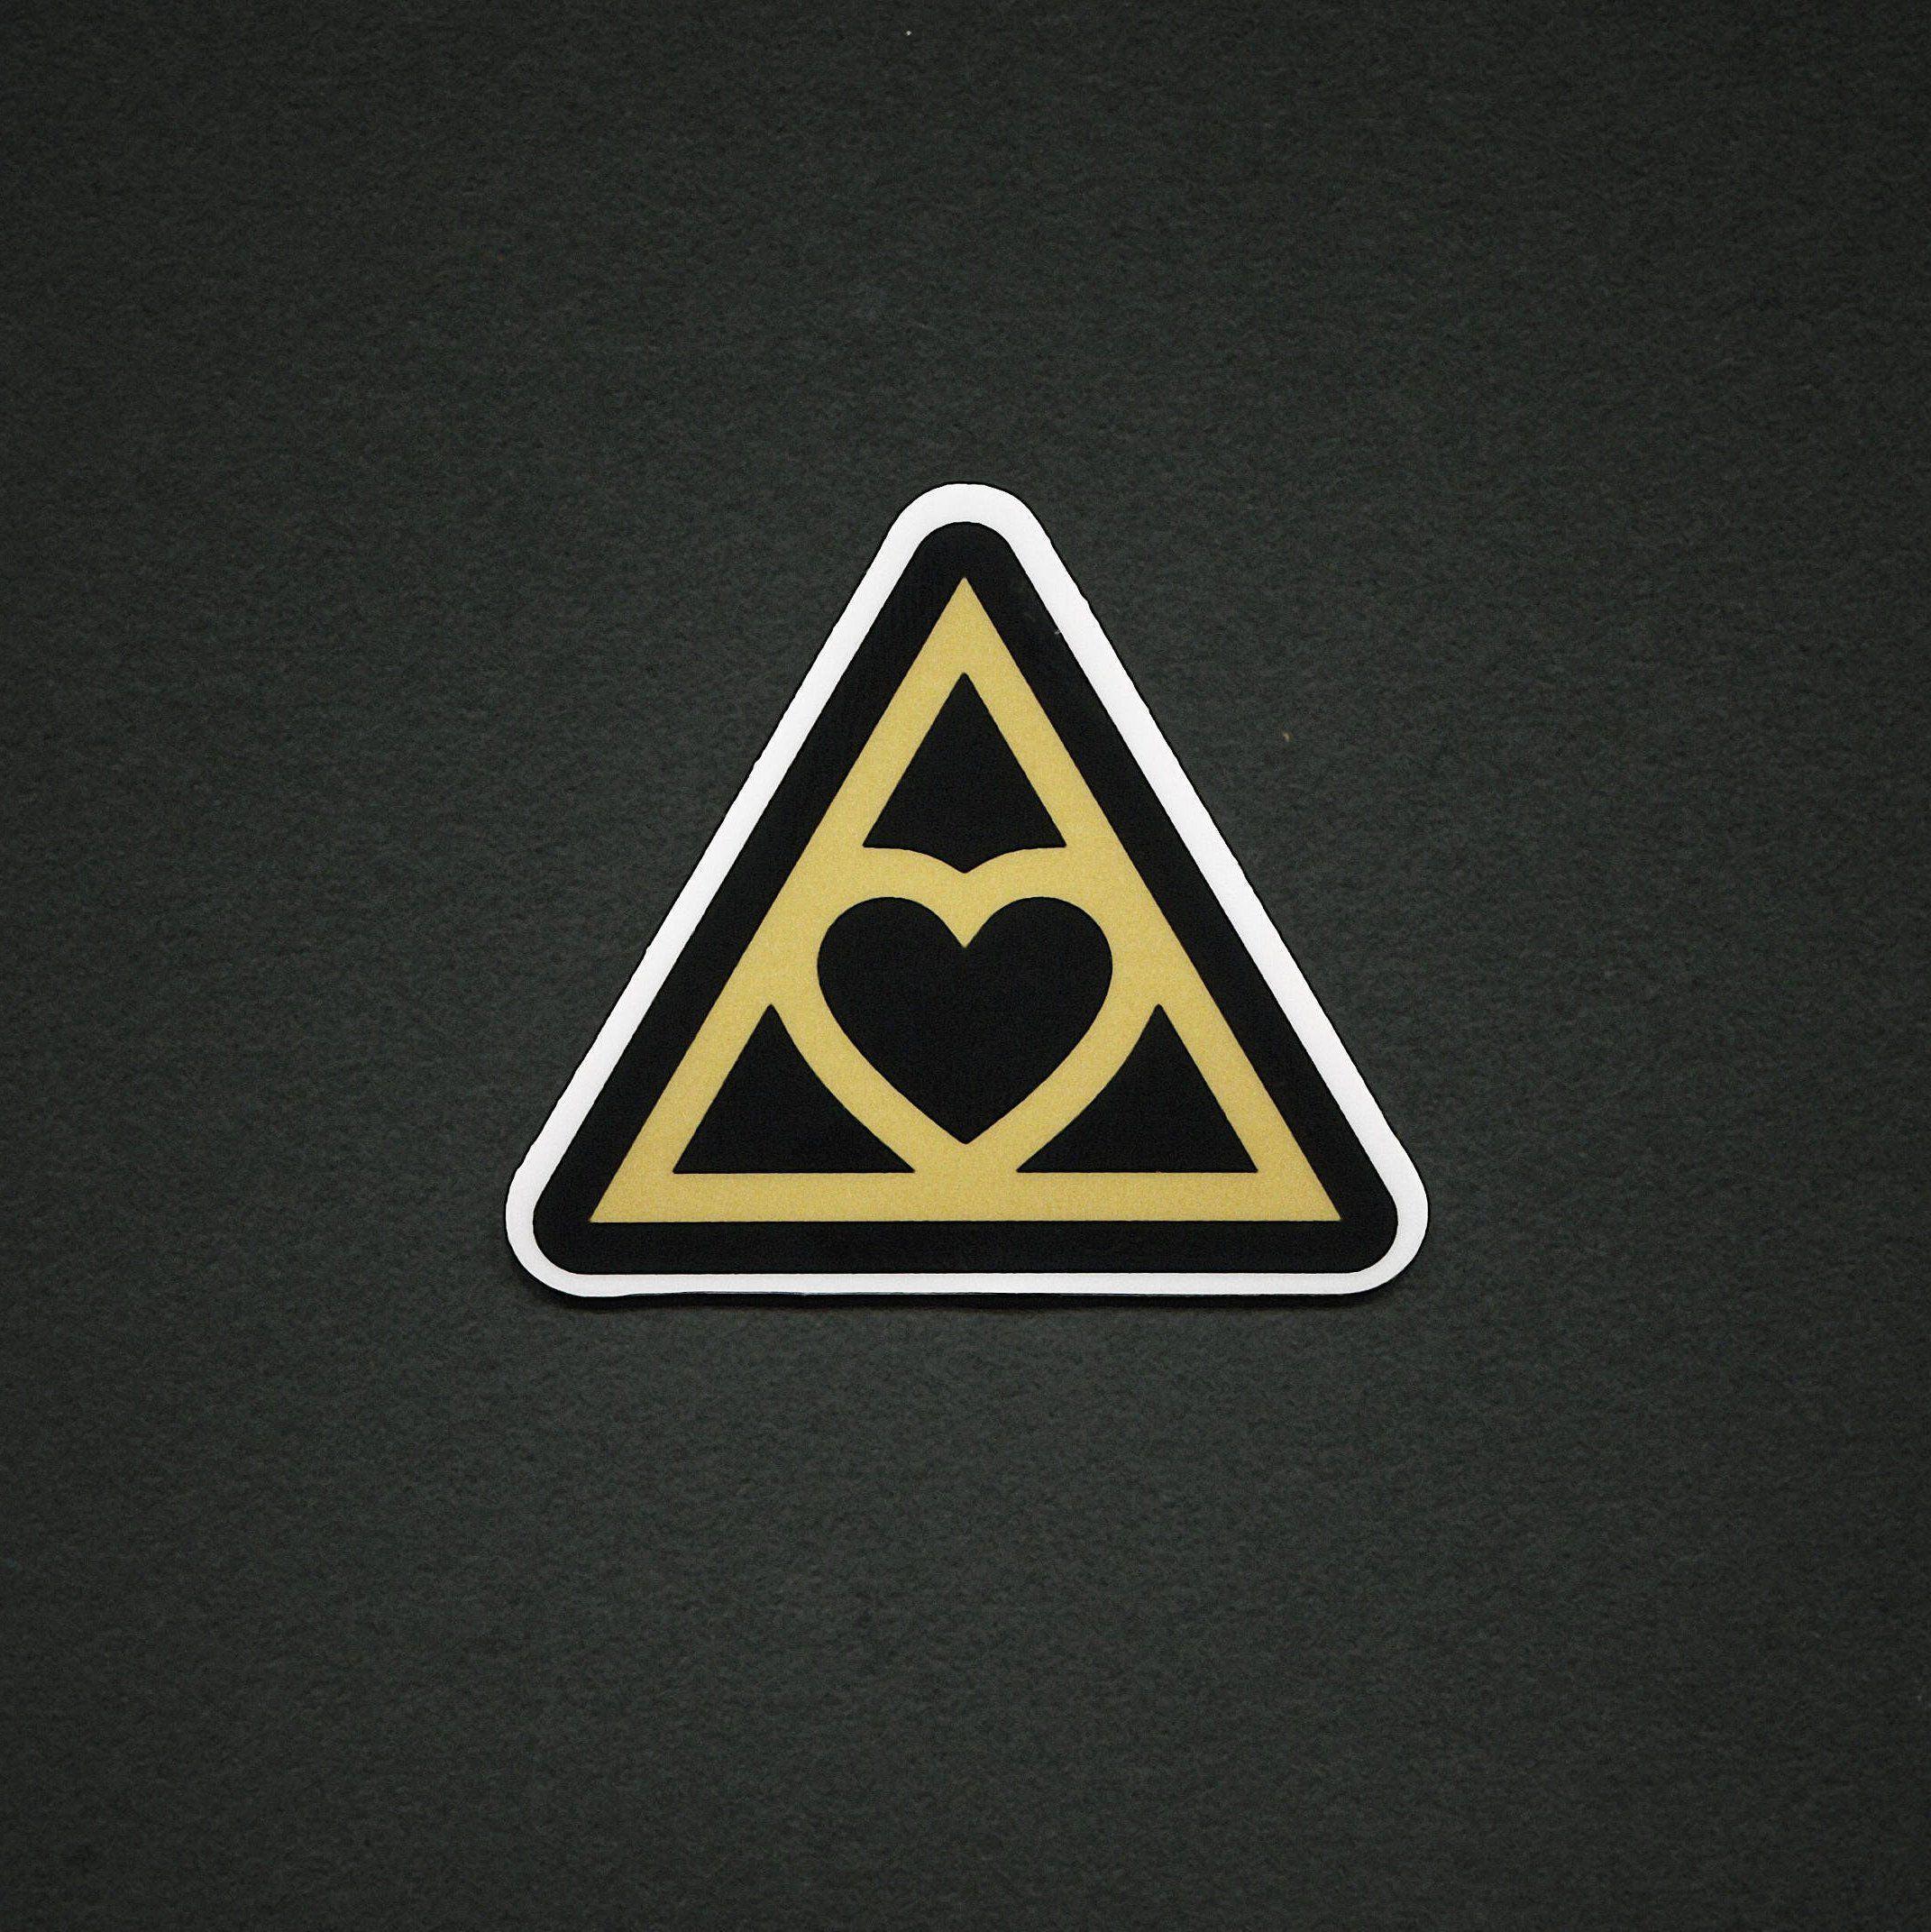 Heart in Triangle Logo - Heart Triangle Sticker. Starseed Supply Co